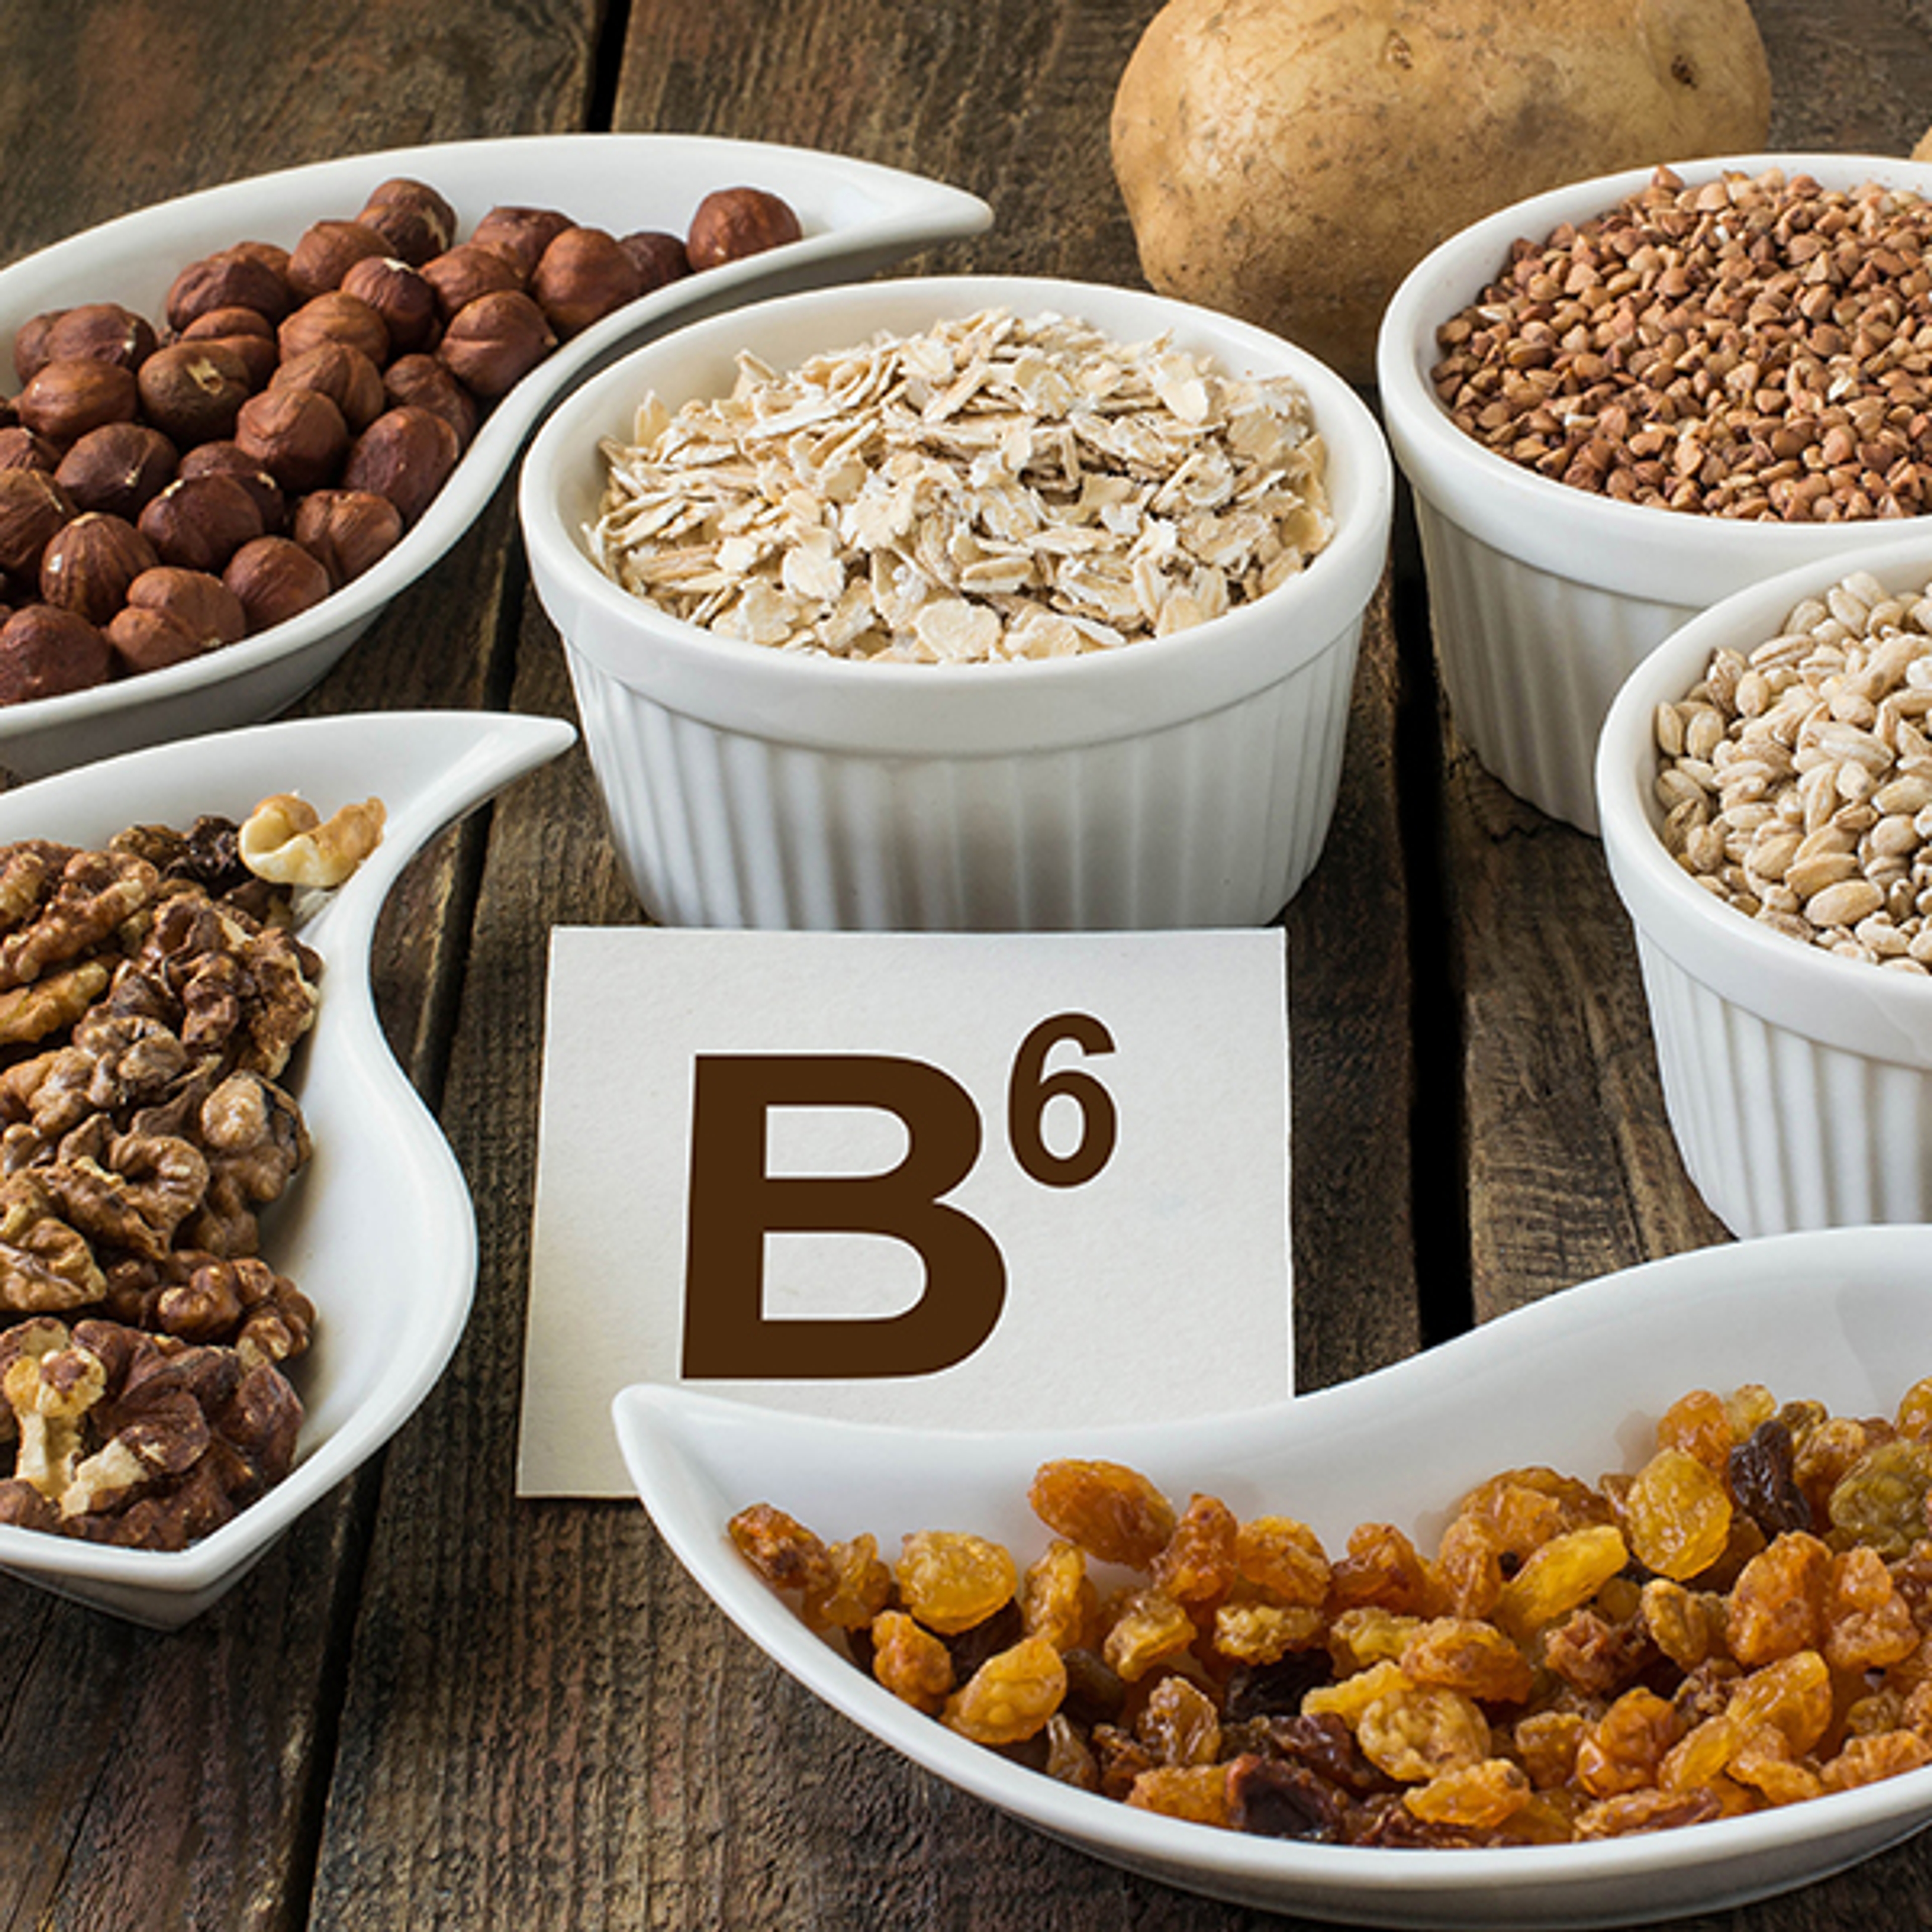 La vitamine B6 - la vitamine polyvalente du groupe B